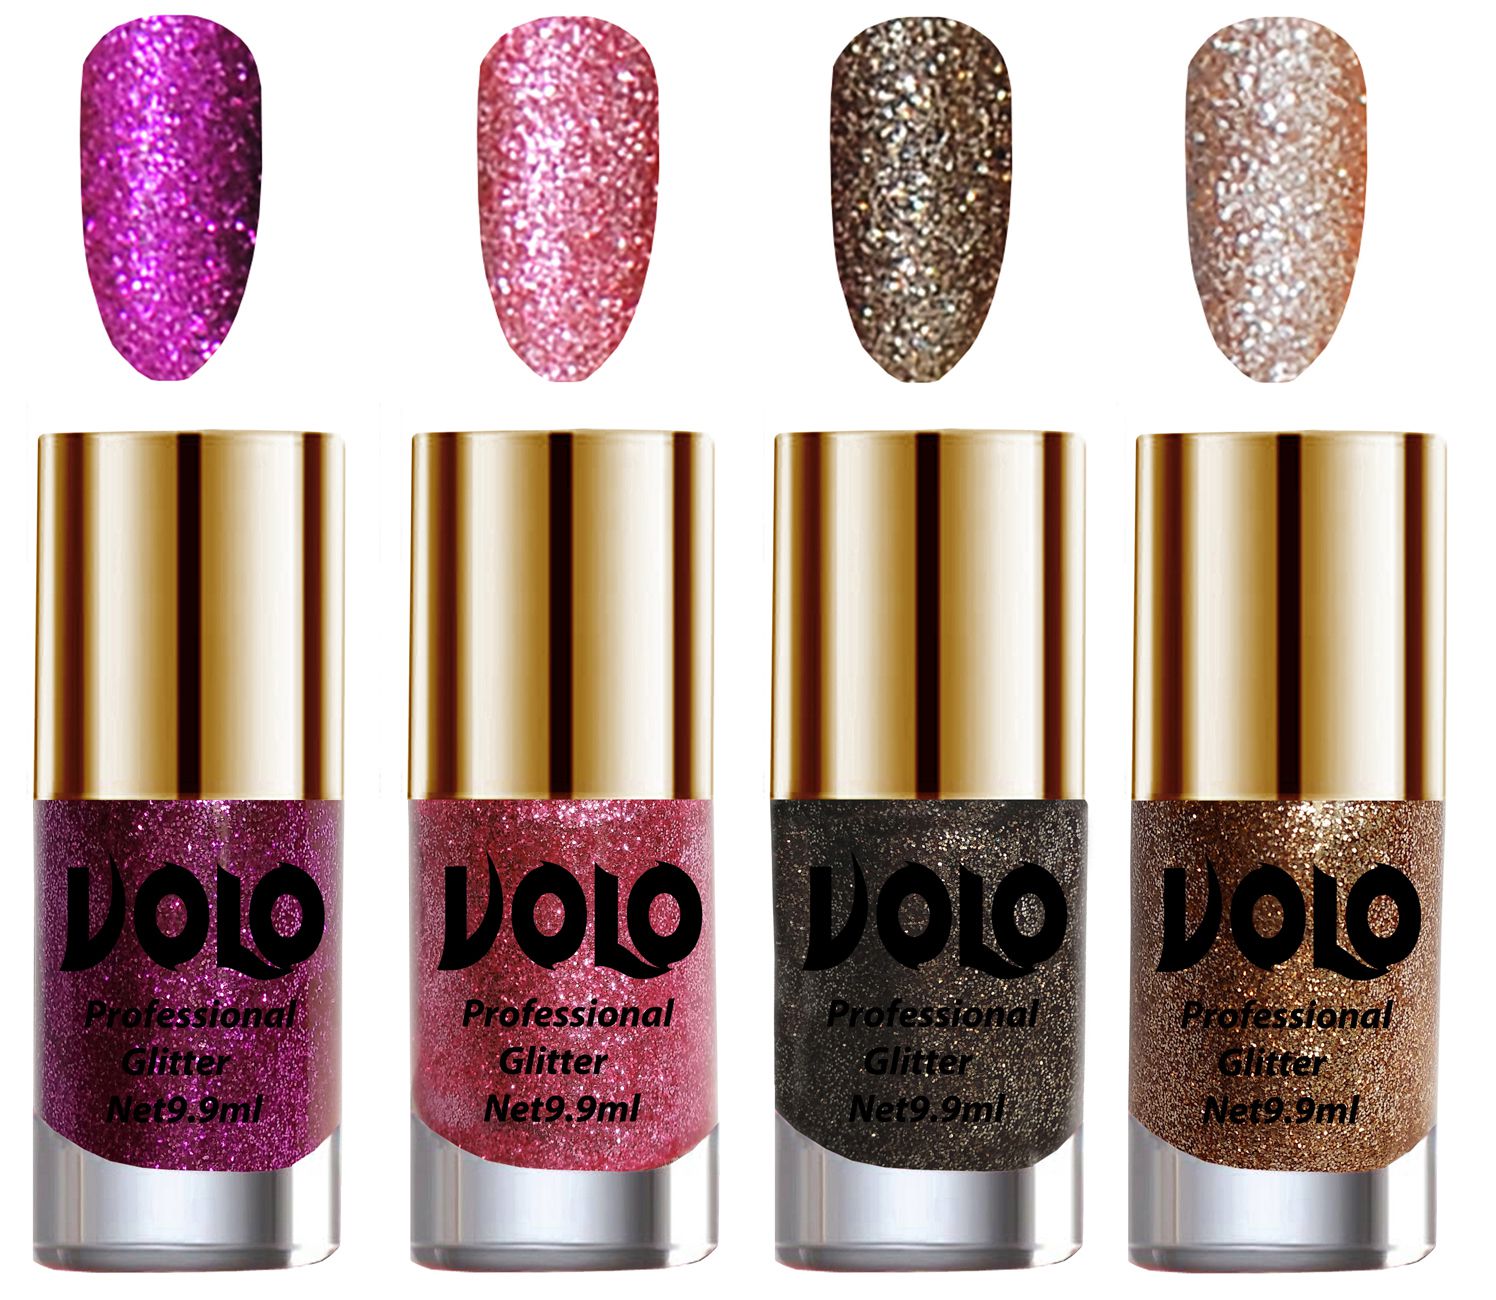     			VOLO Professionally Used Glitter Shine Nail Polish Purple,Pink,Grey Gold Pack of 4 39 mL